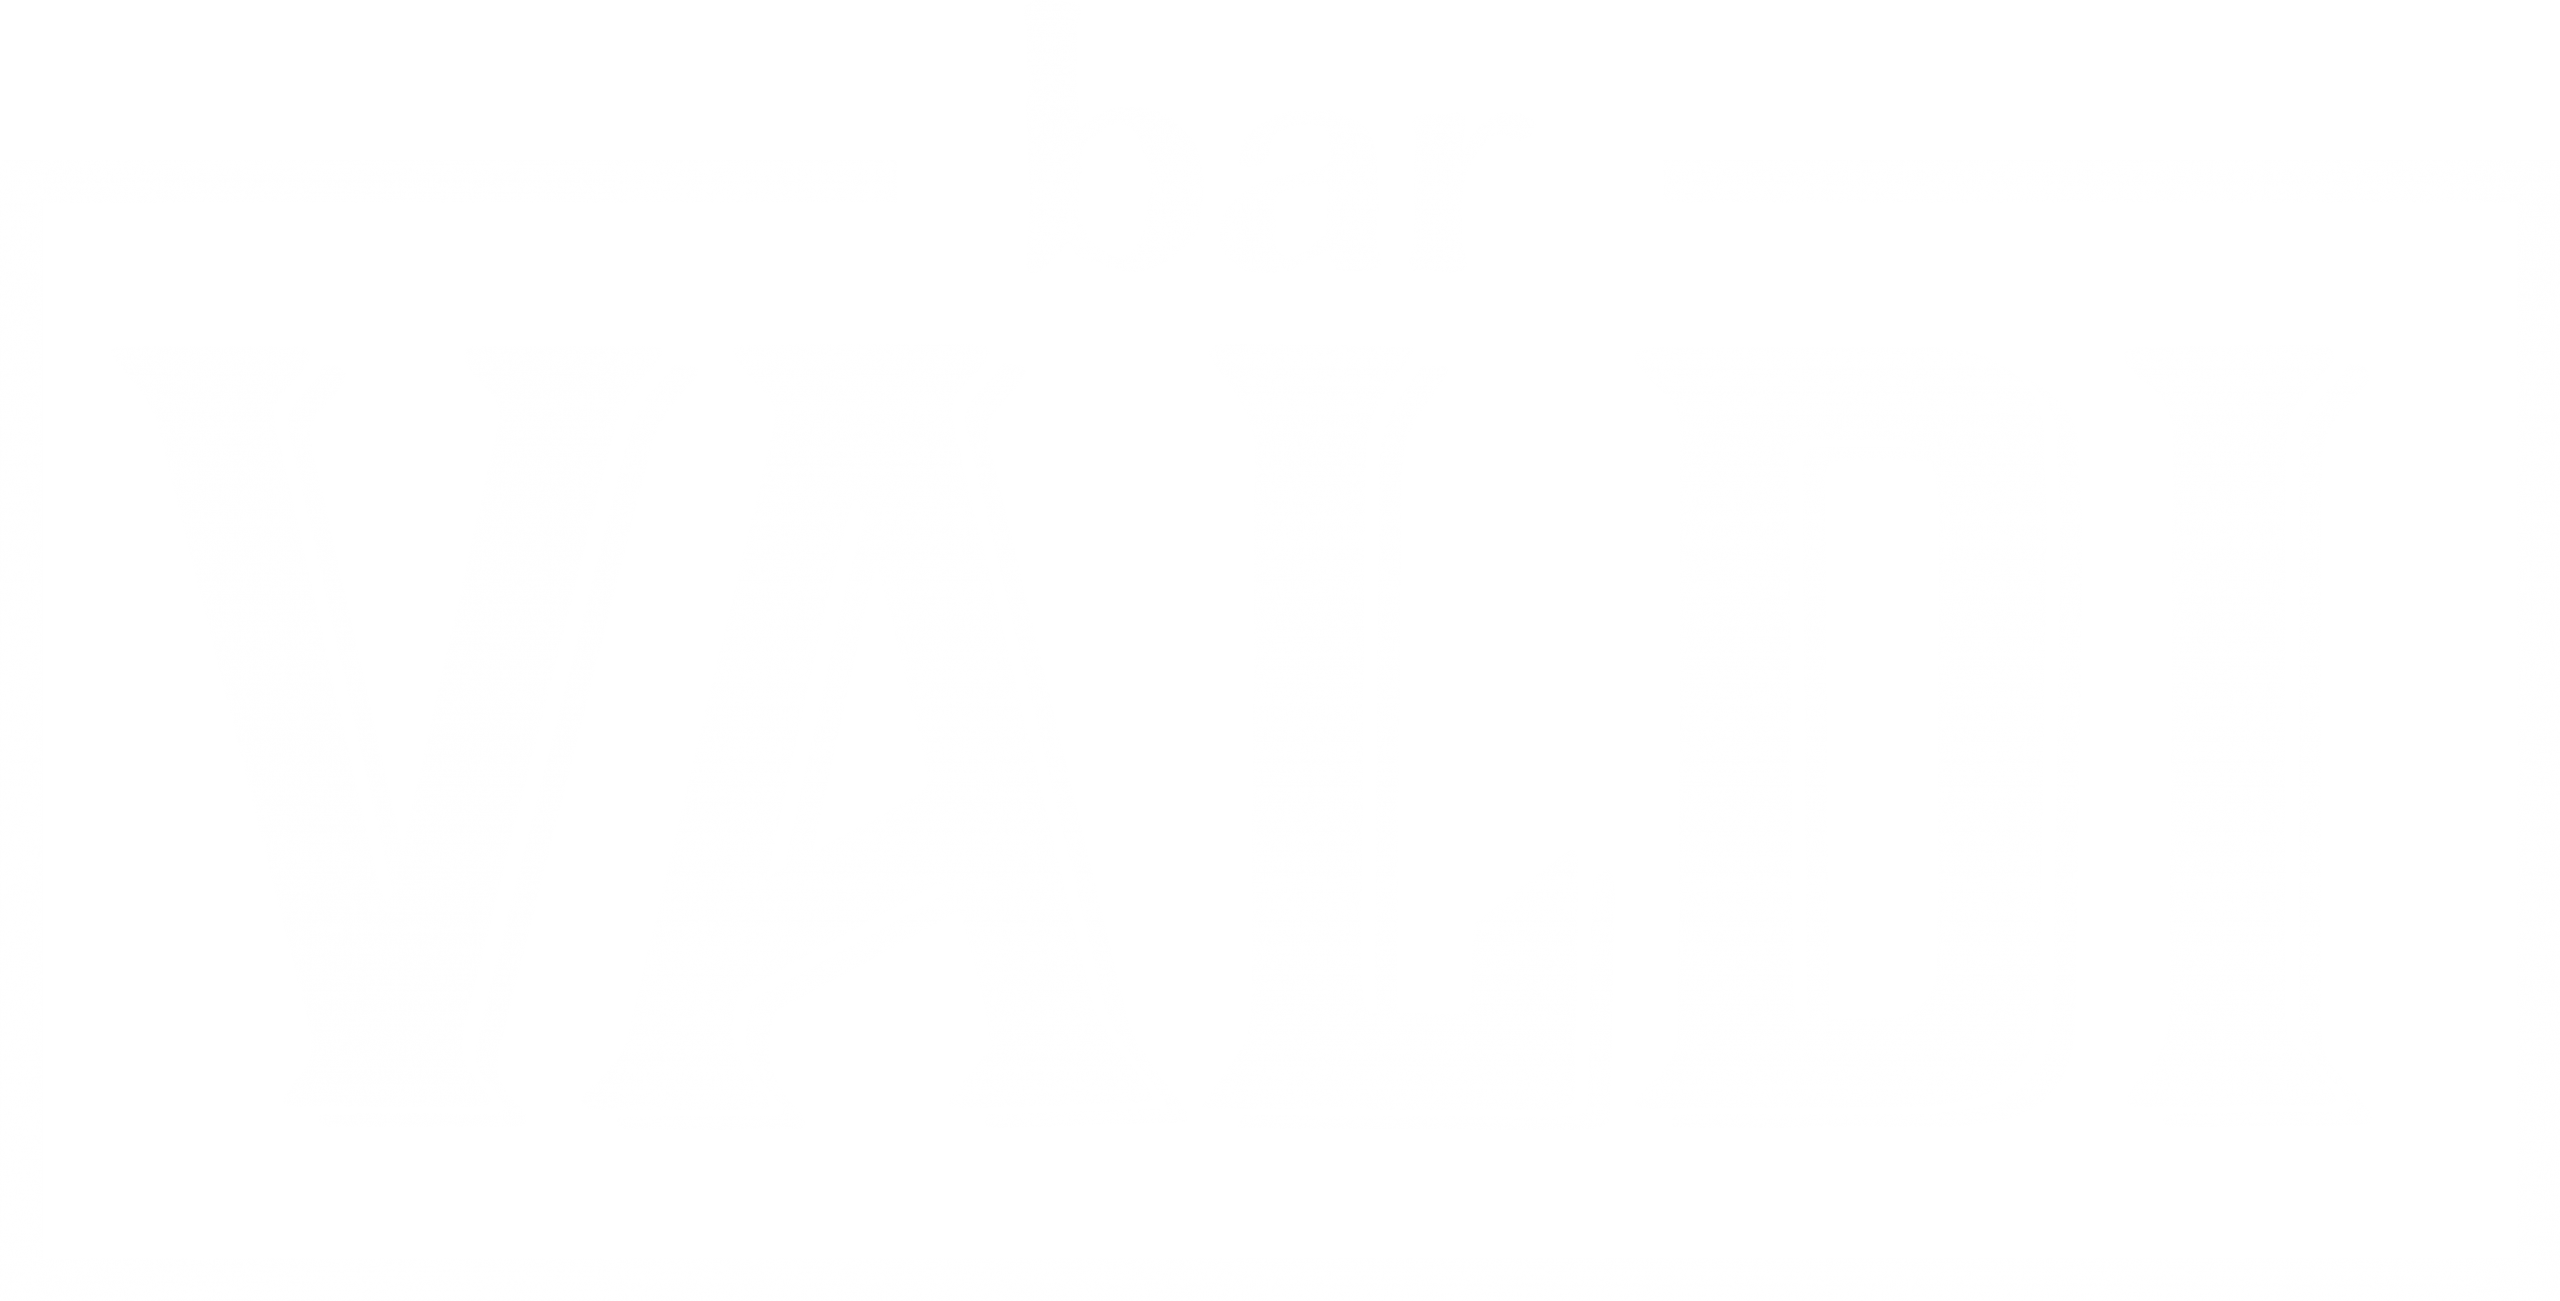 Bar Valdi